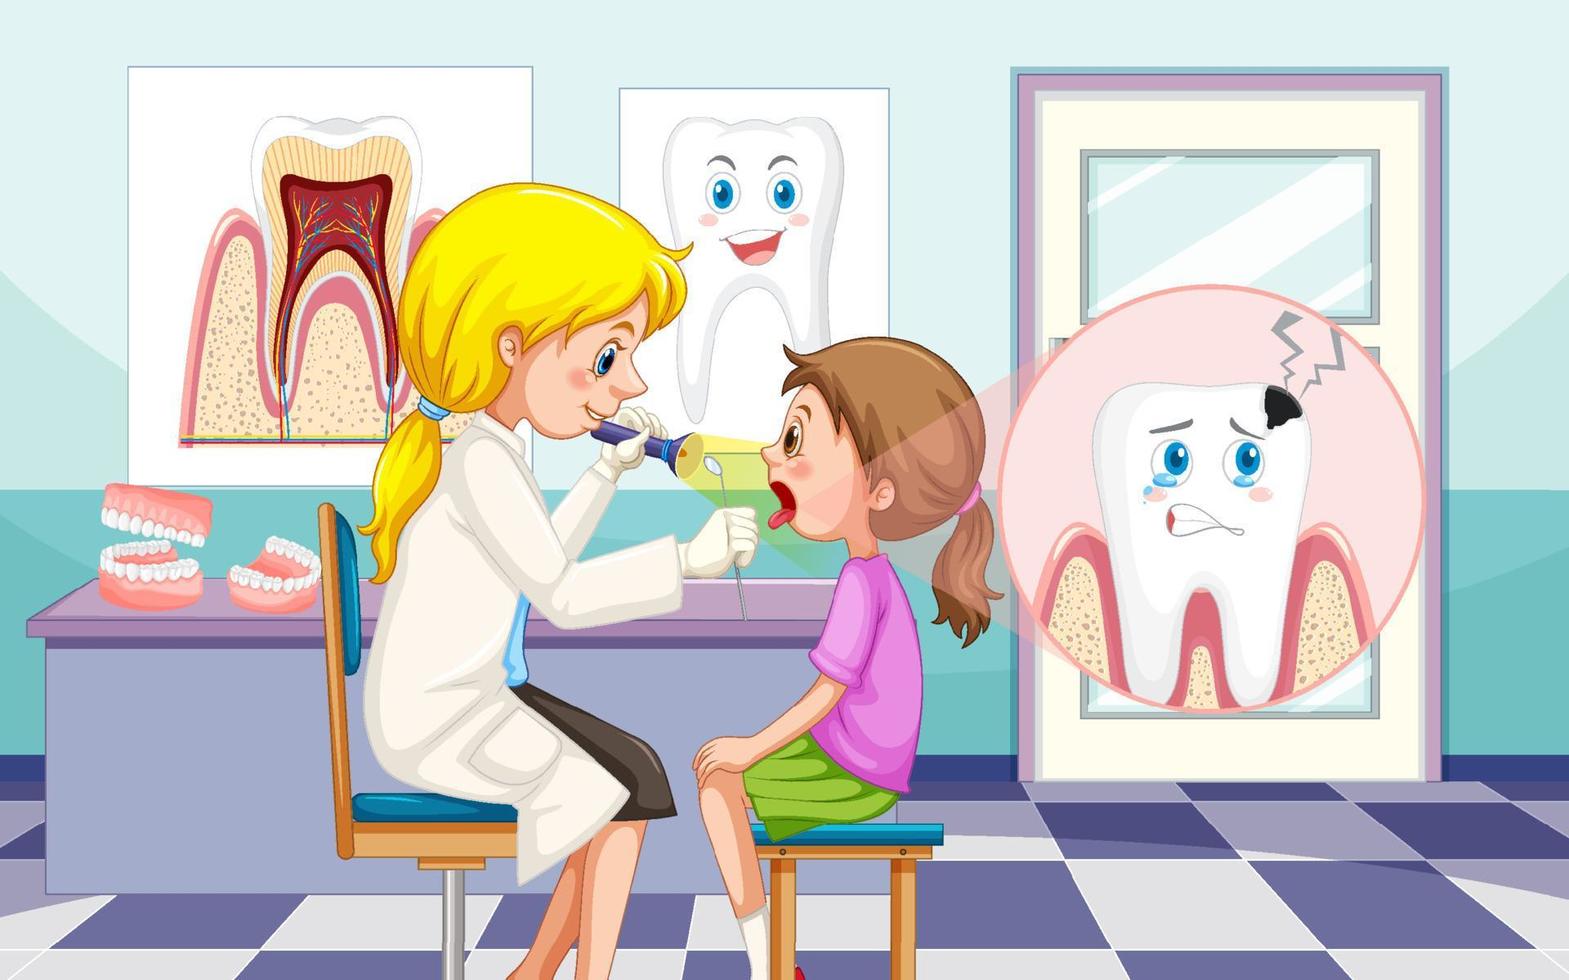 Dentist woman examining patient teeth in clinic vector